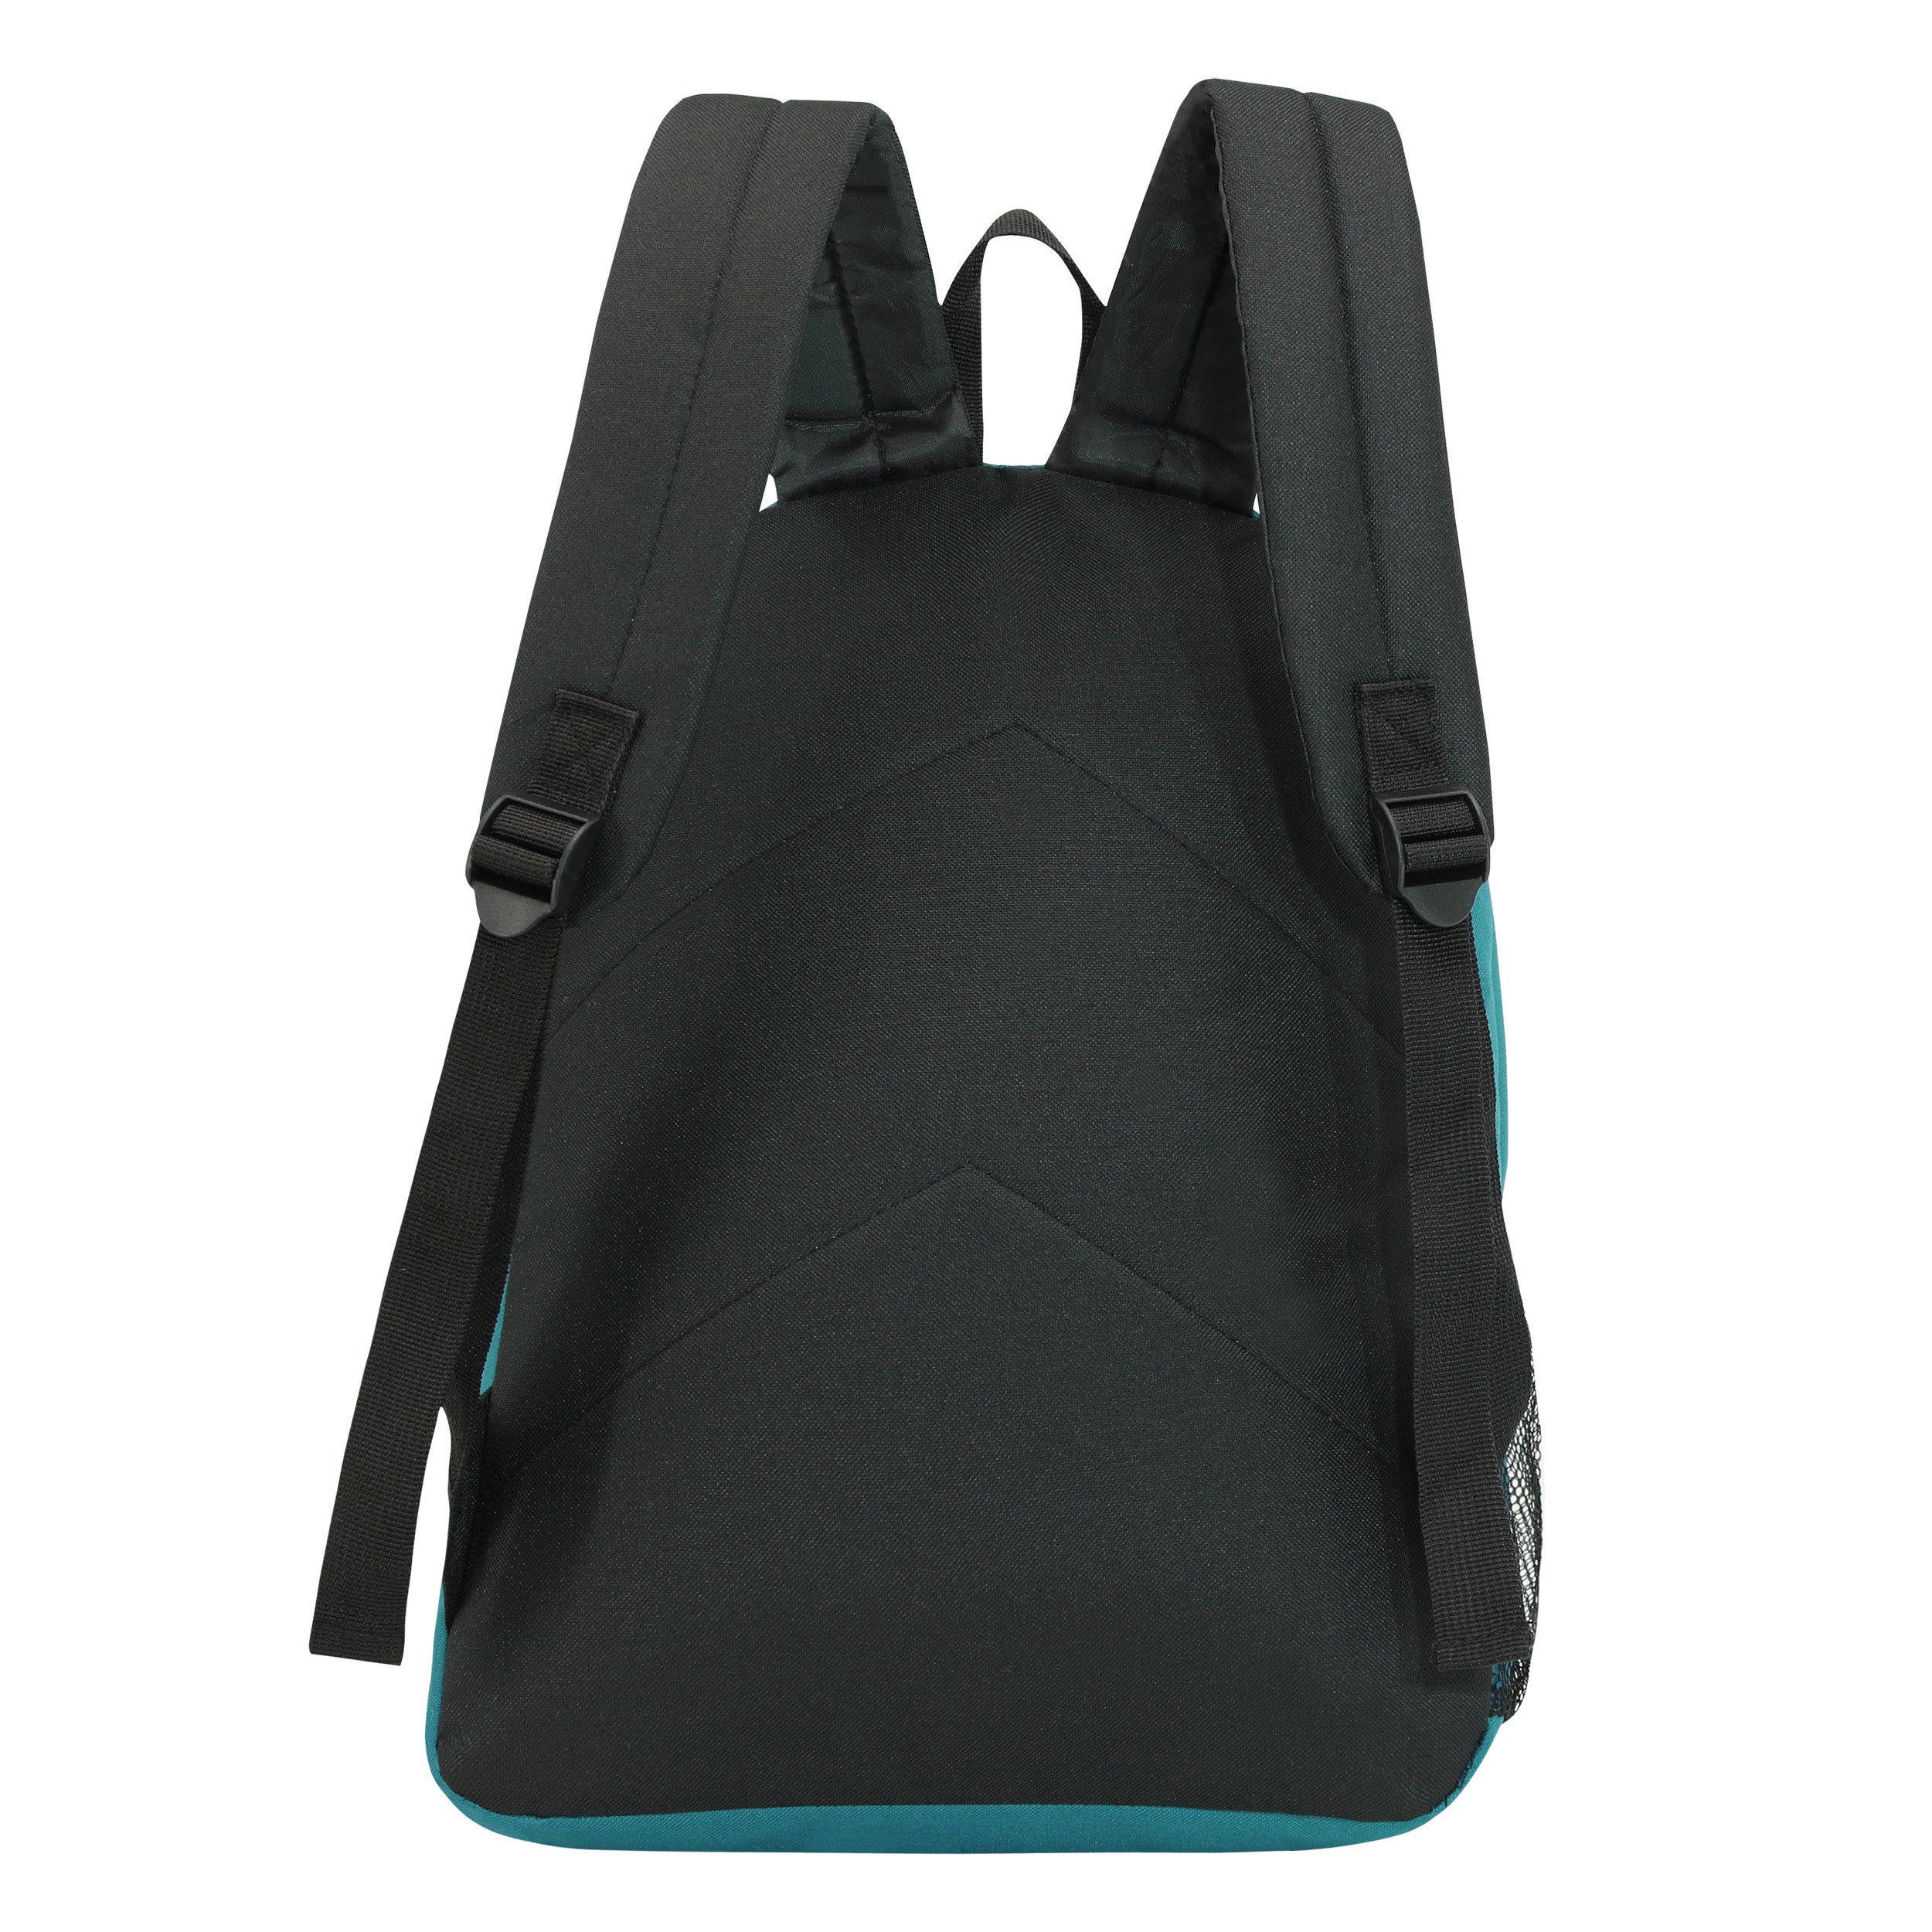 17" Classic Kids Wholesale Backpacks in Teal | Bulk Case of 24 Bookbags